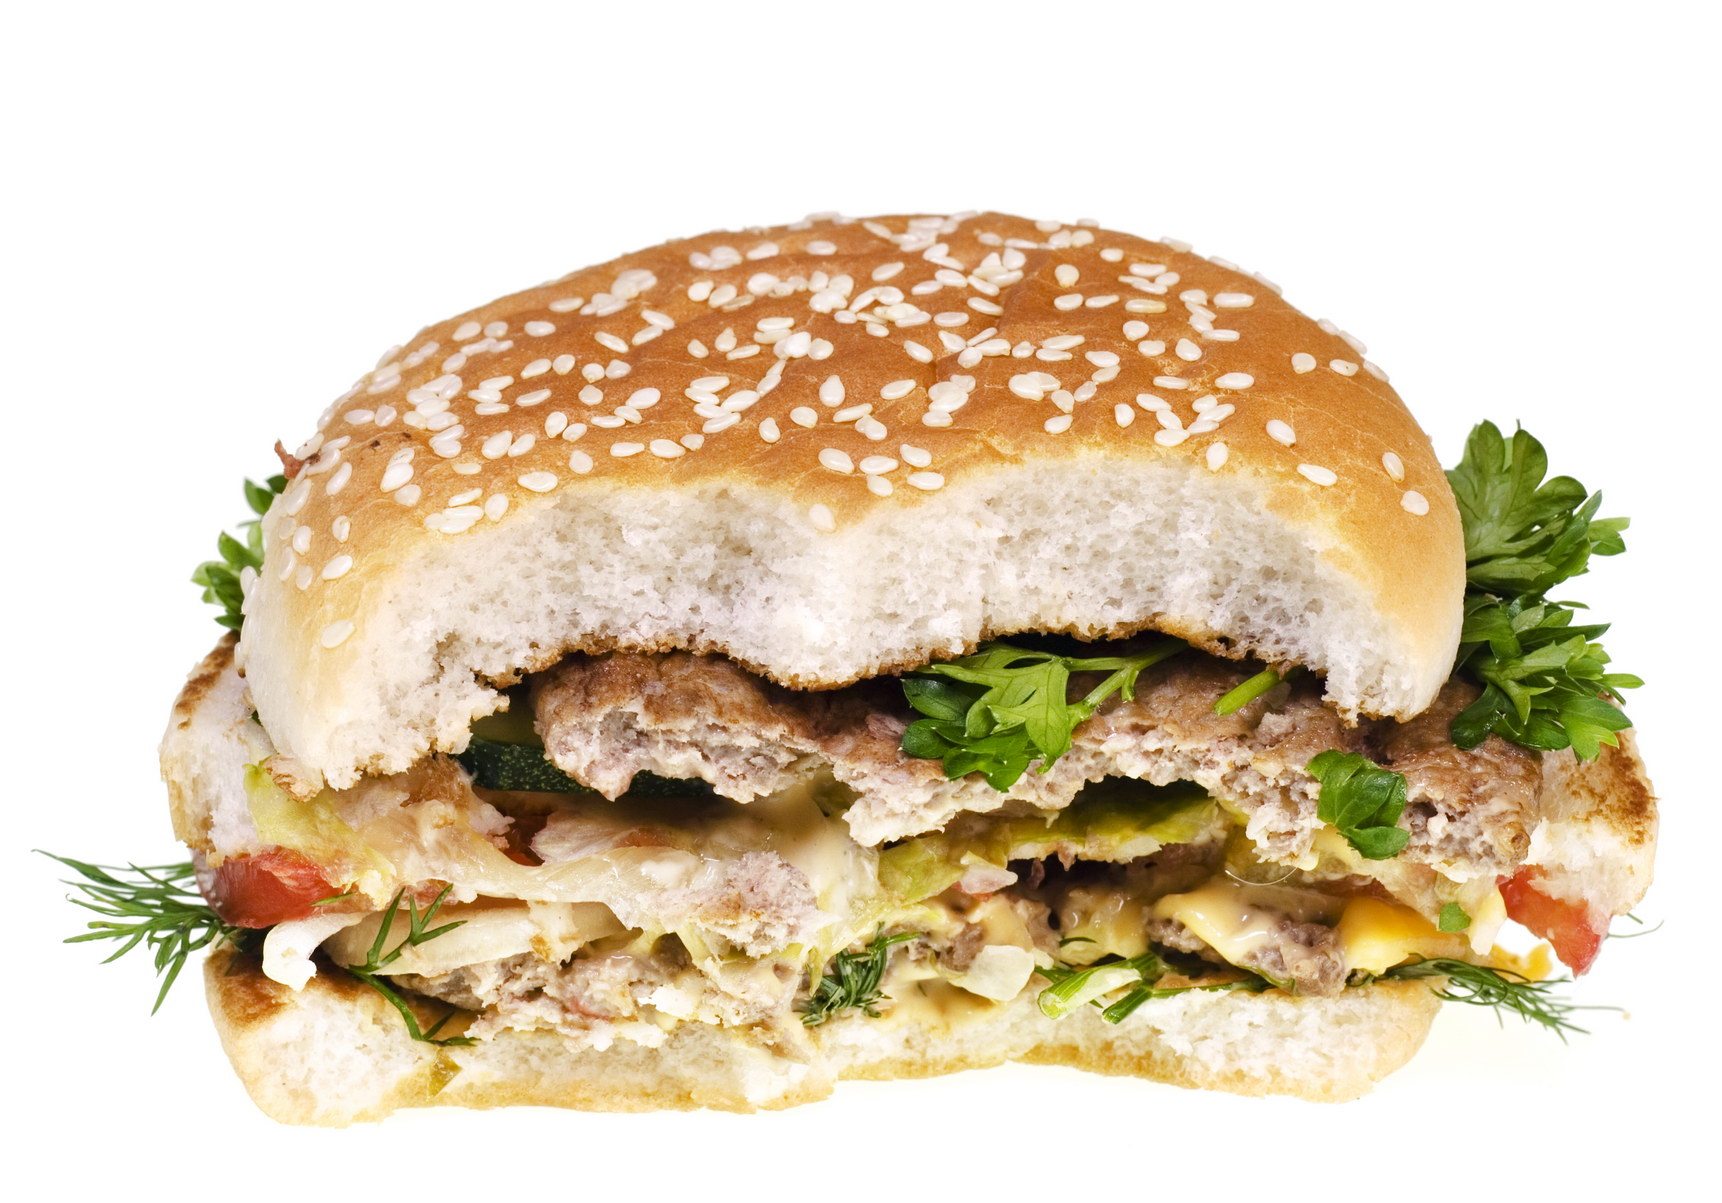 Hamburger with a bite photo